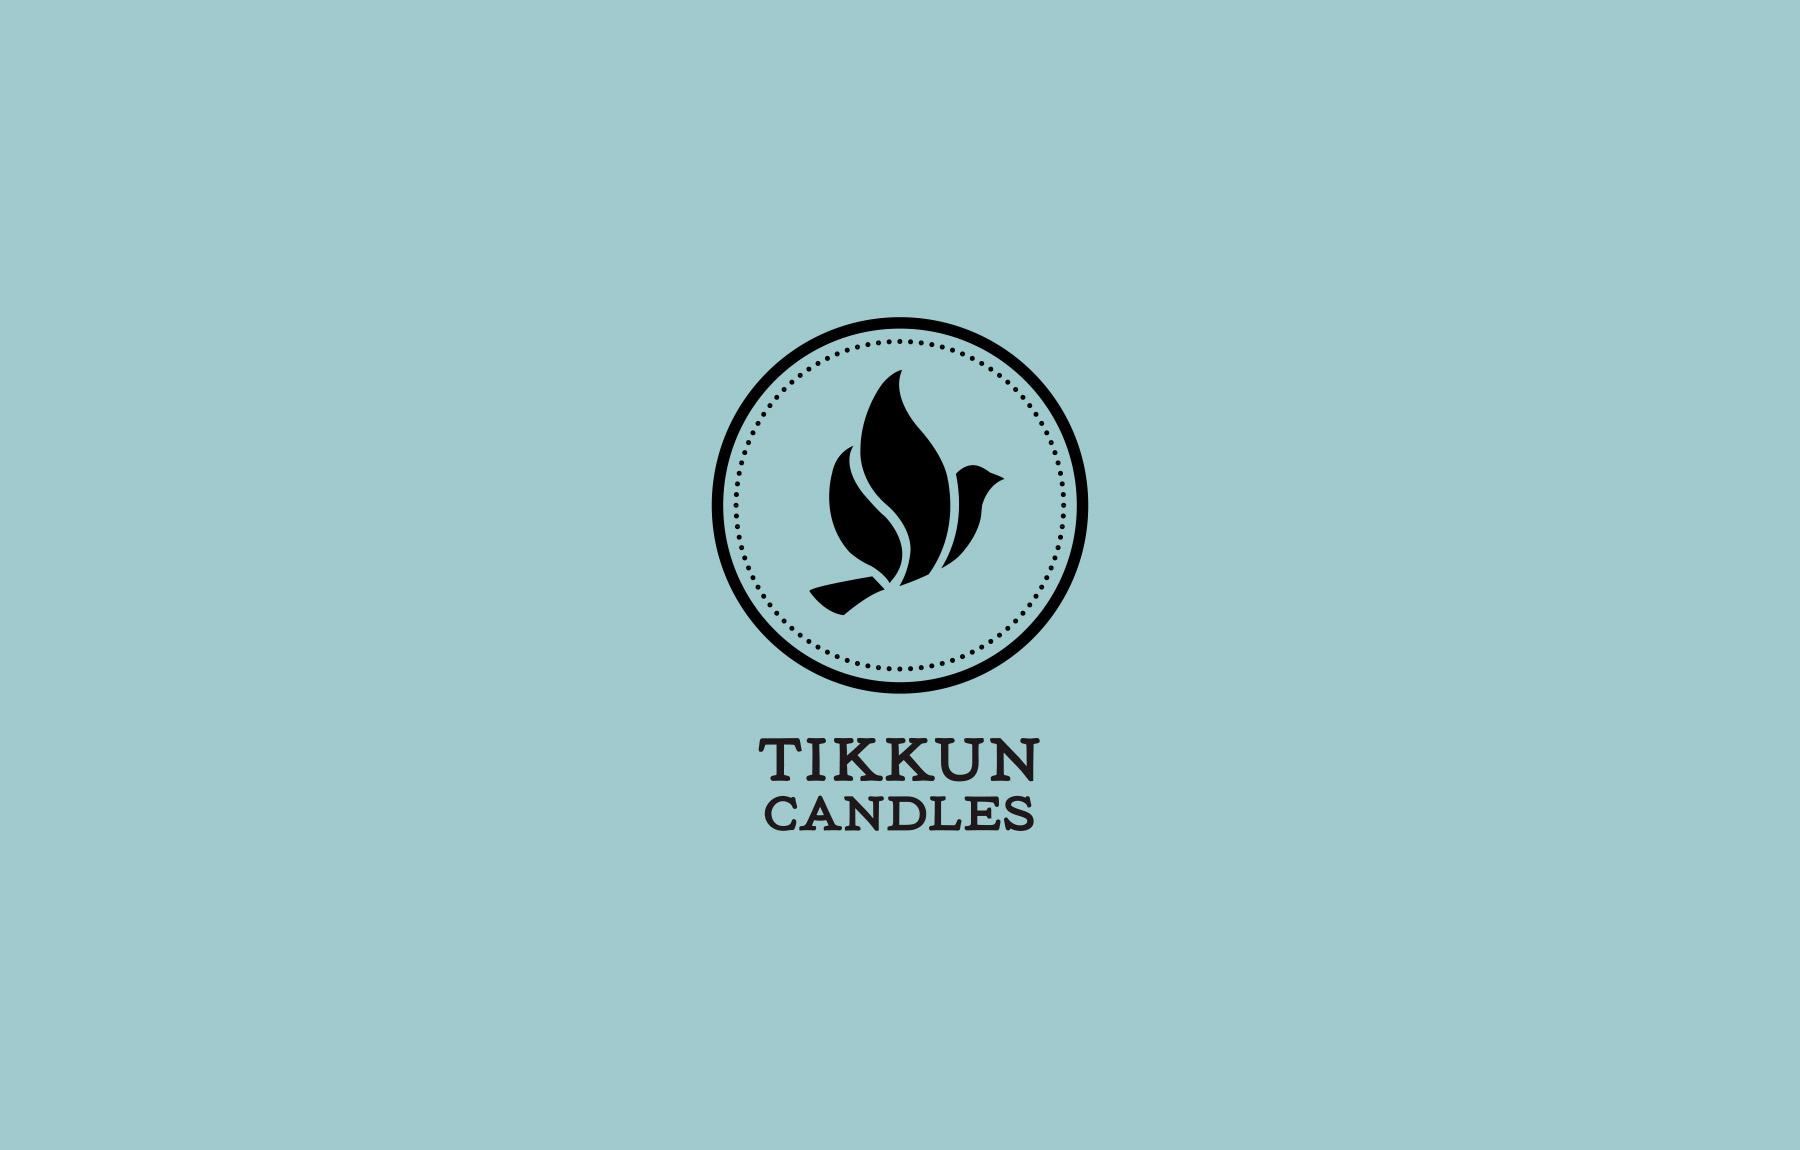 Alternative logo design for Tikkun Candles